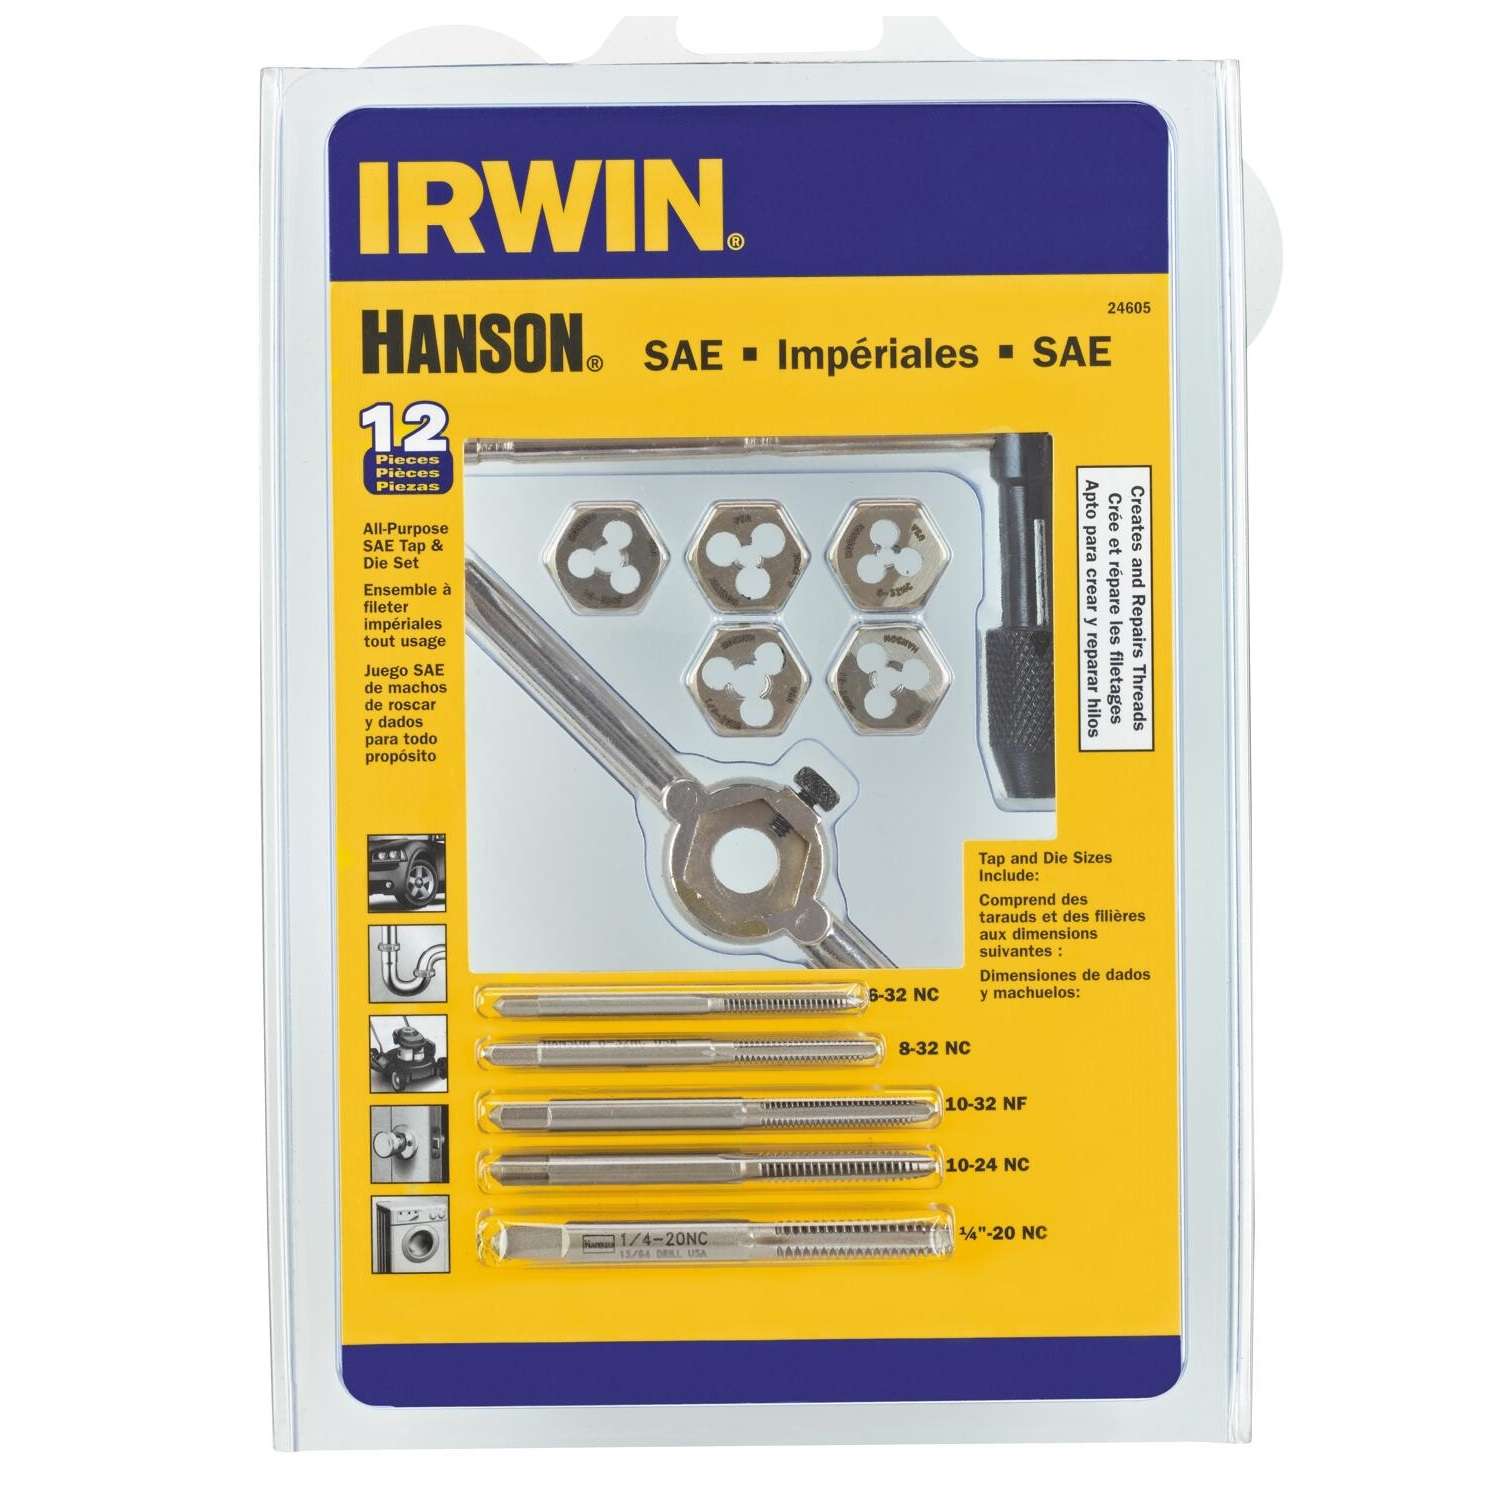 Irwin Hanson High Carbon Steel Sae Tap And Die Set 6 32nc 8 32nc 10